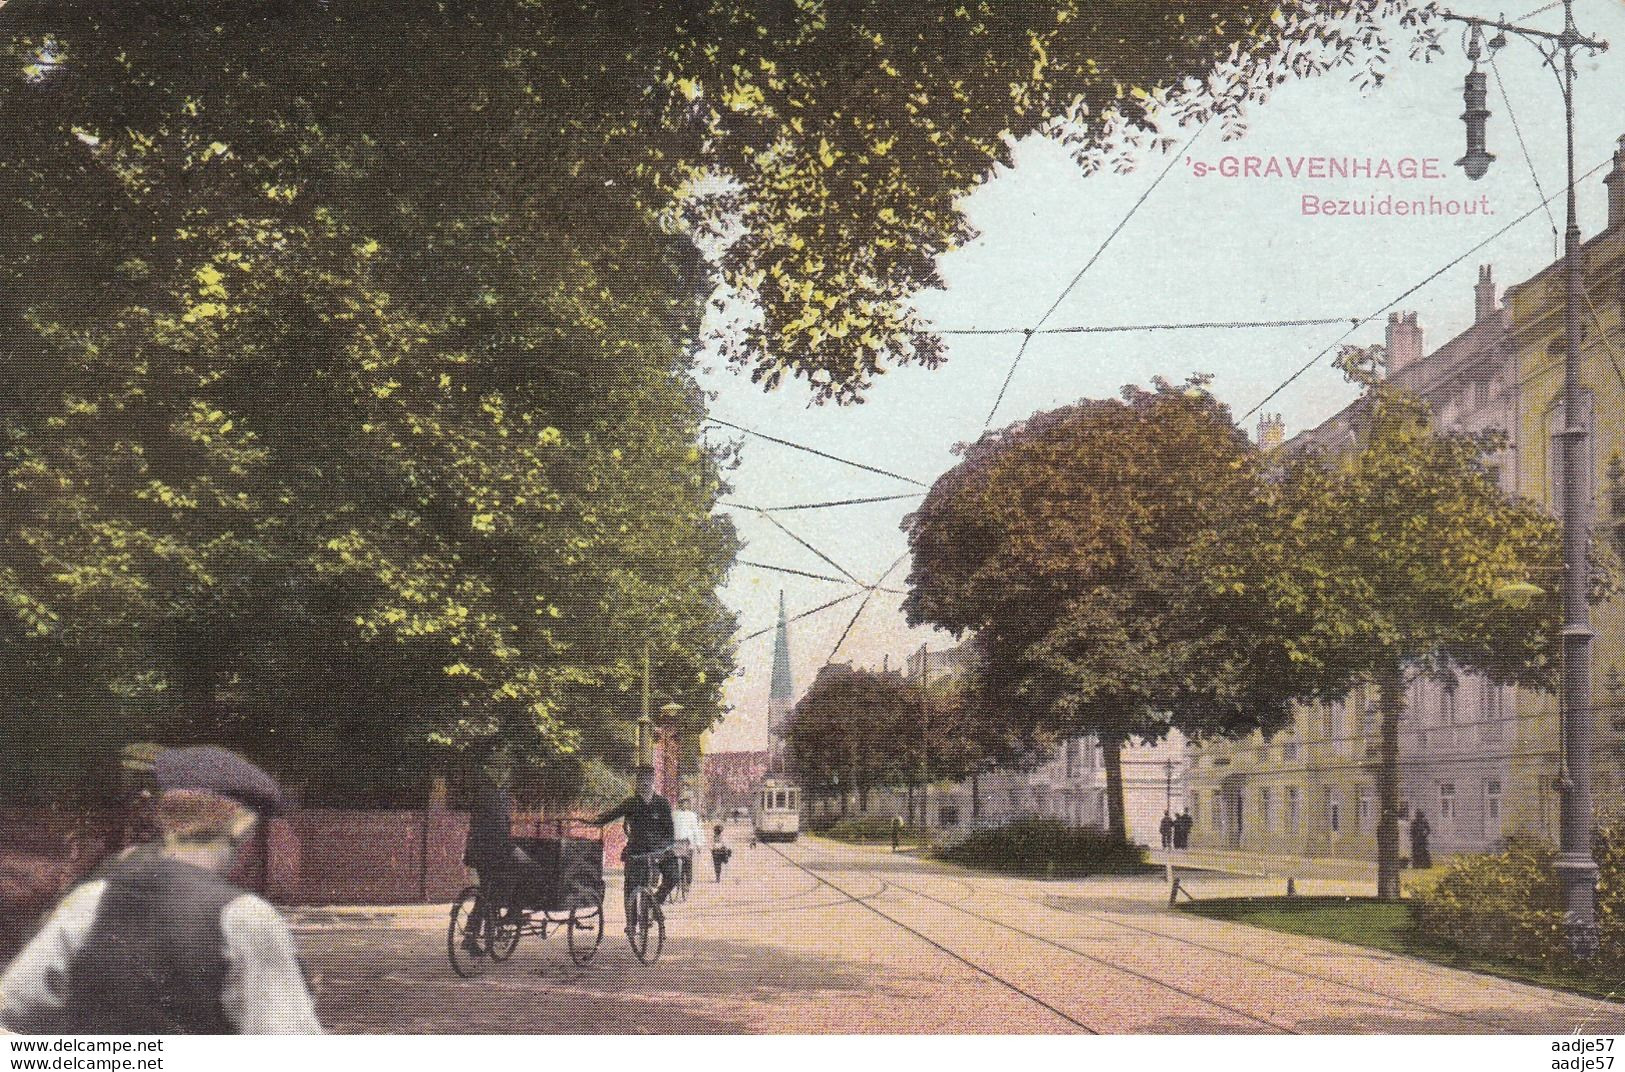 Netherlands Pays Bas Den Haag Bezuidenhout Tramway Militair 1914 - Tranvía